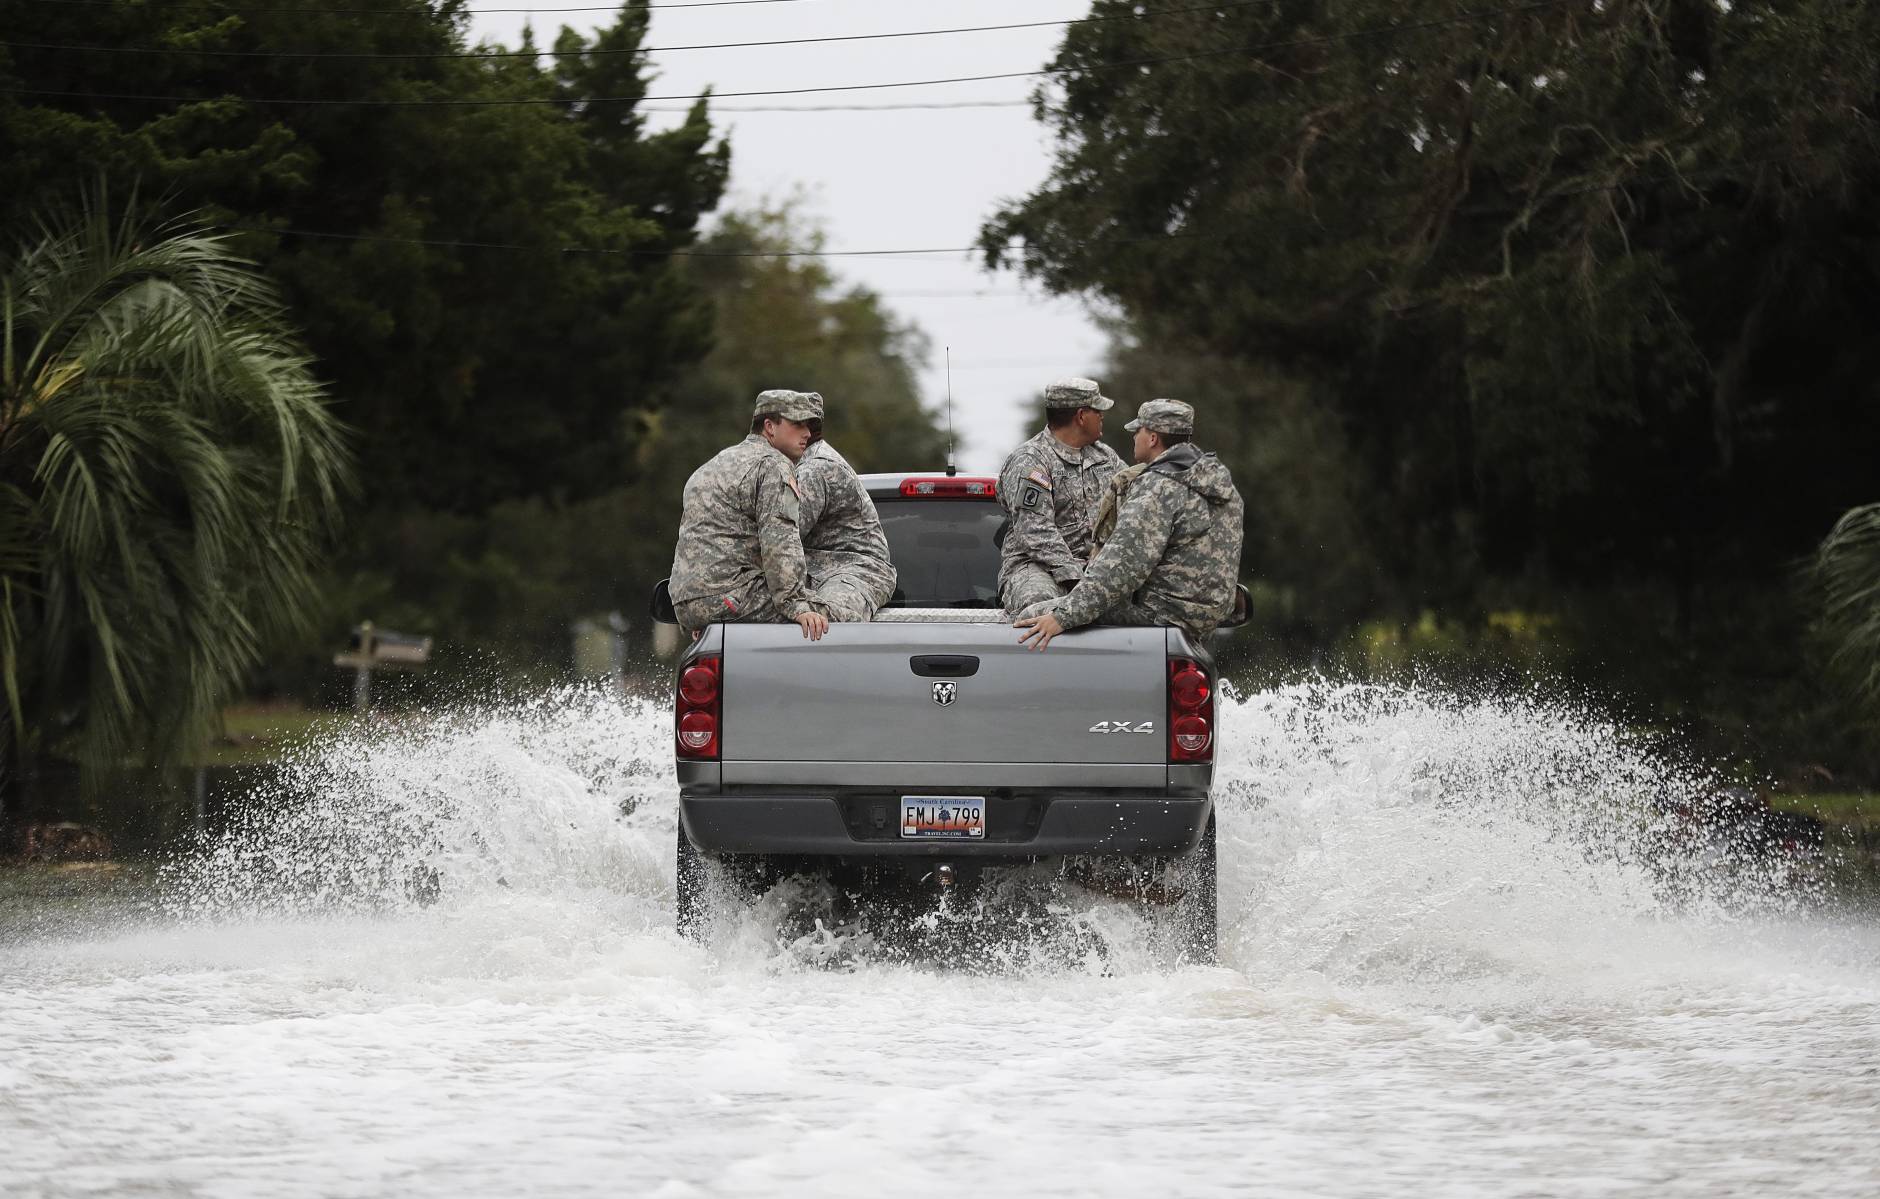 Members of the National Guard patrol through a flooded street after Hurricane Matthew hit the tiny beach community of Edisto Beach, S.C., Saturday, Oct. 8, 2016. (AP Photo/David Goldman)